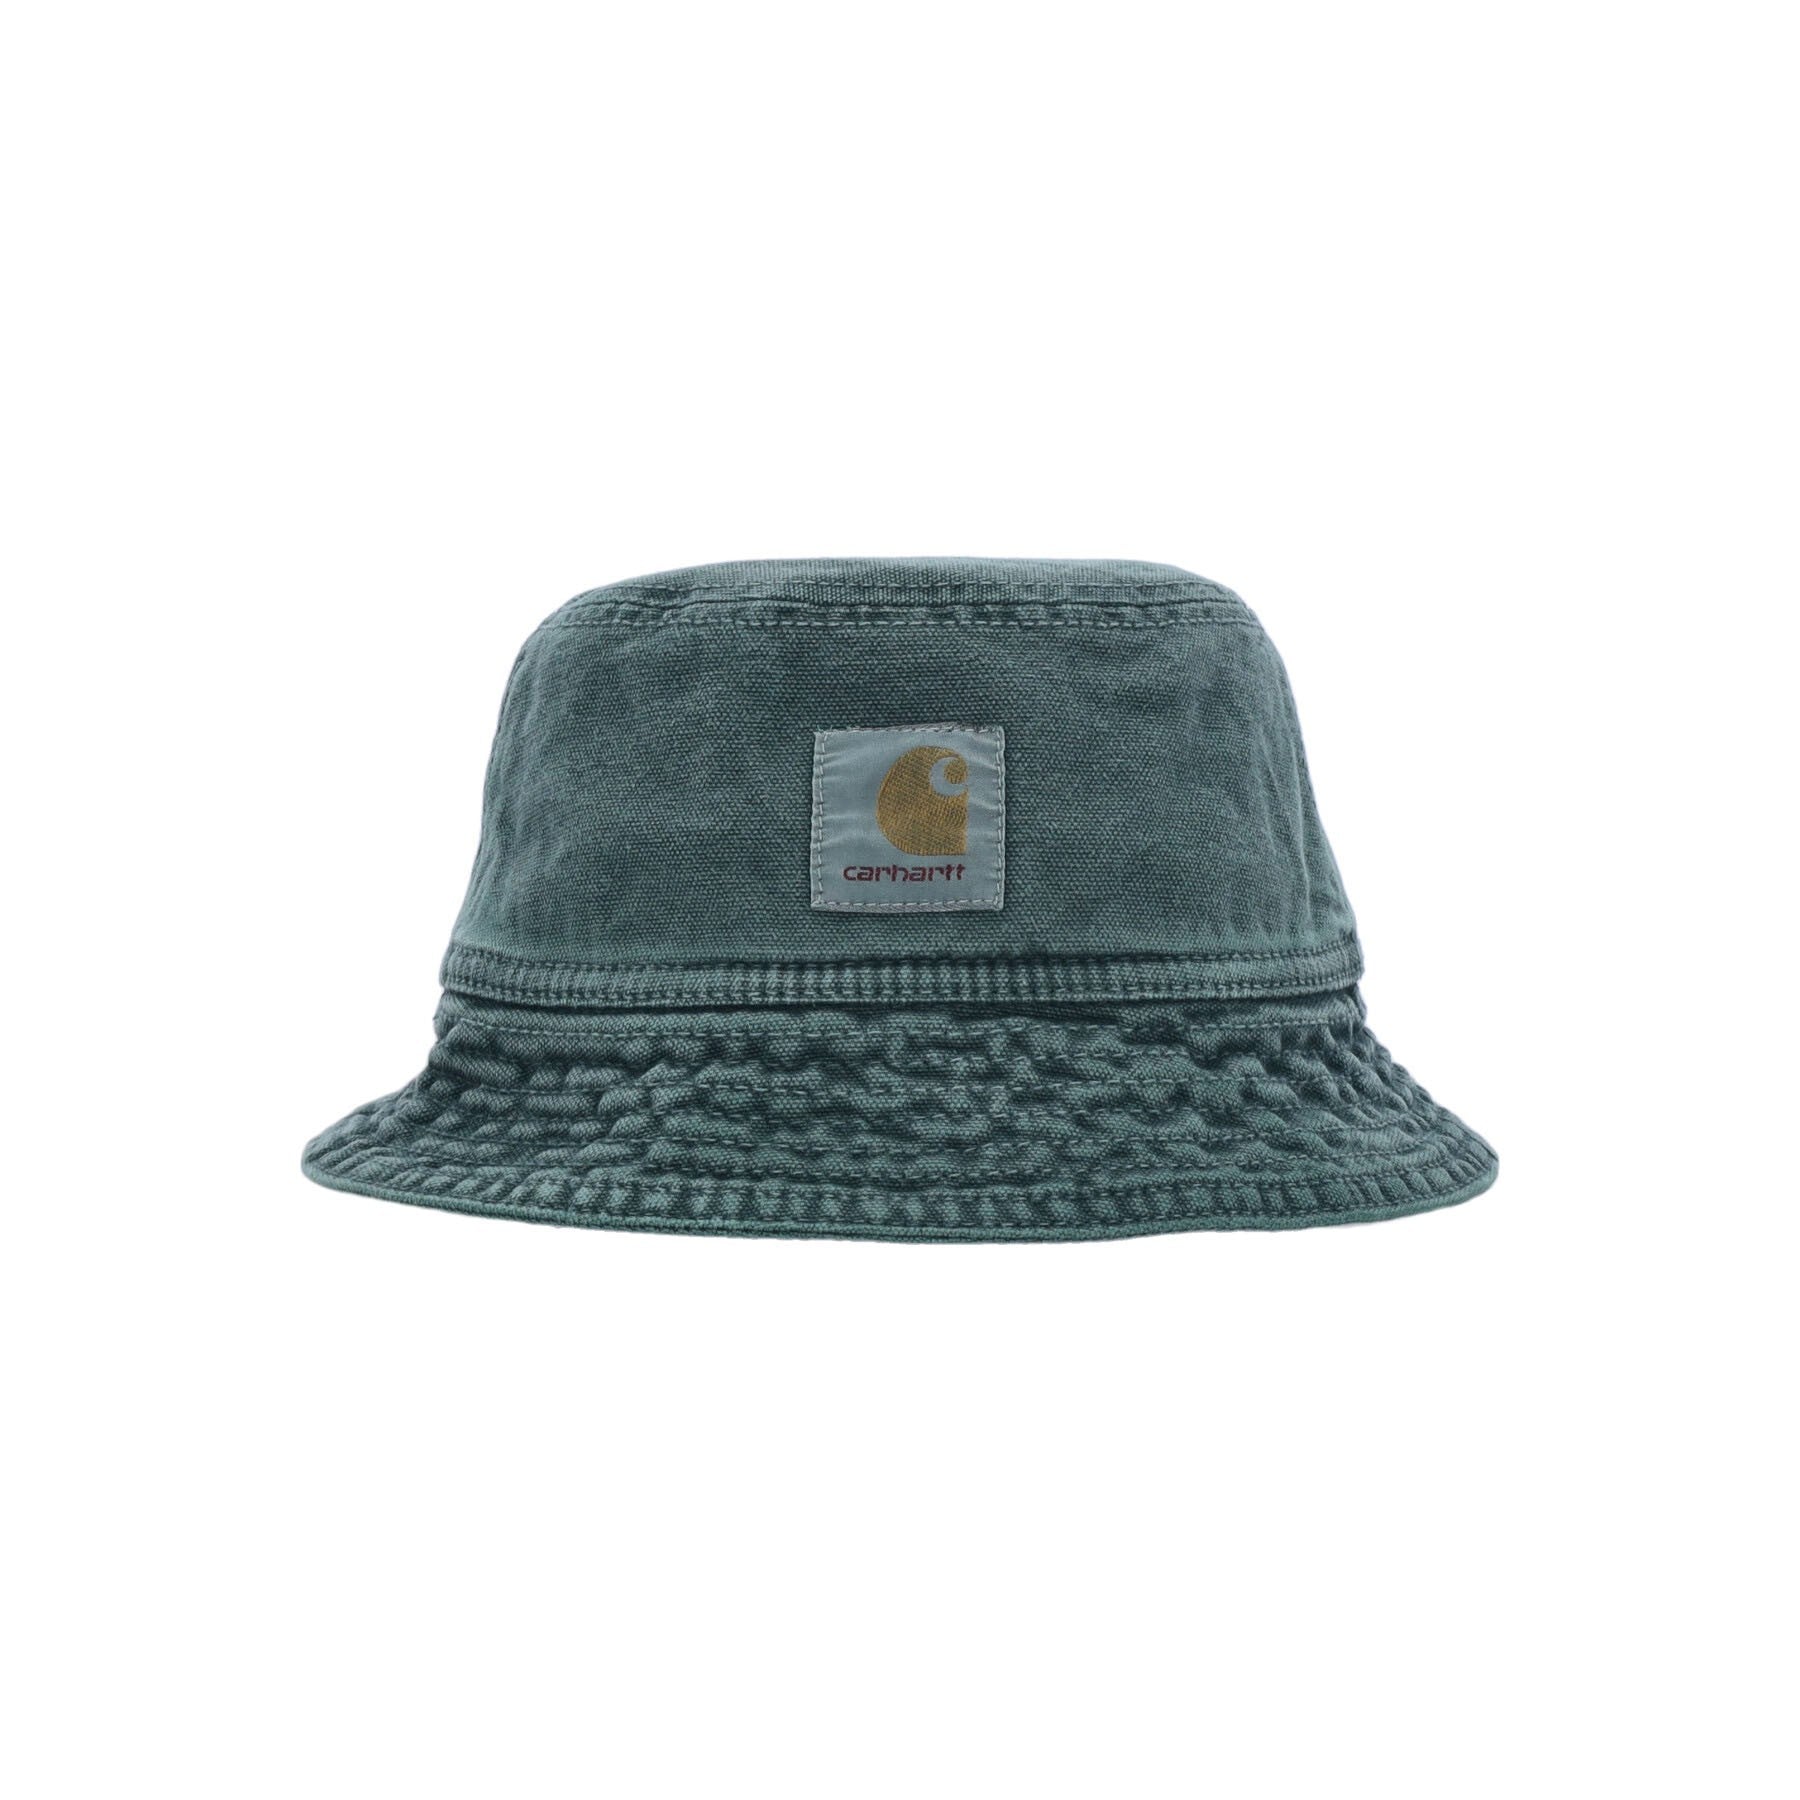 Carhartt Wip, Cappello Da Pescatore Uomo Bayfield Bucket Hat, Botanic Faded